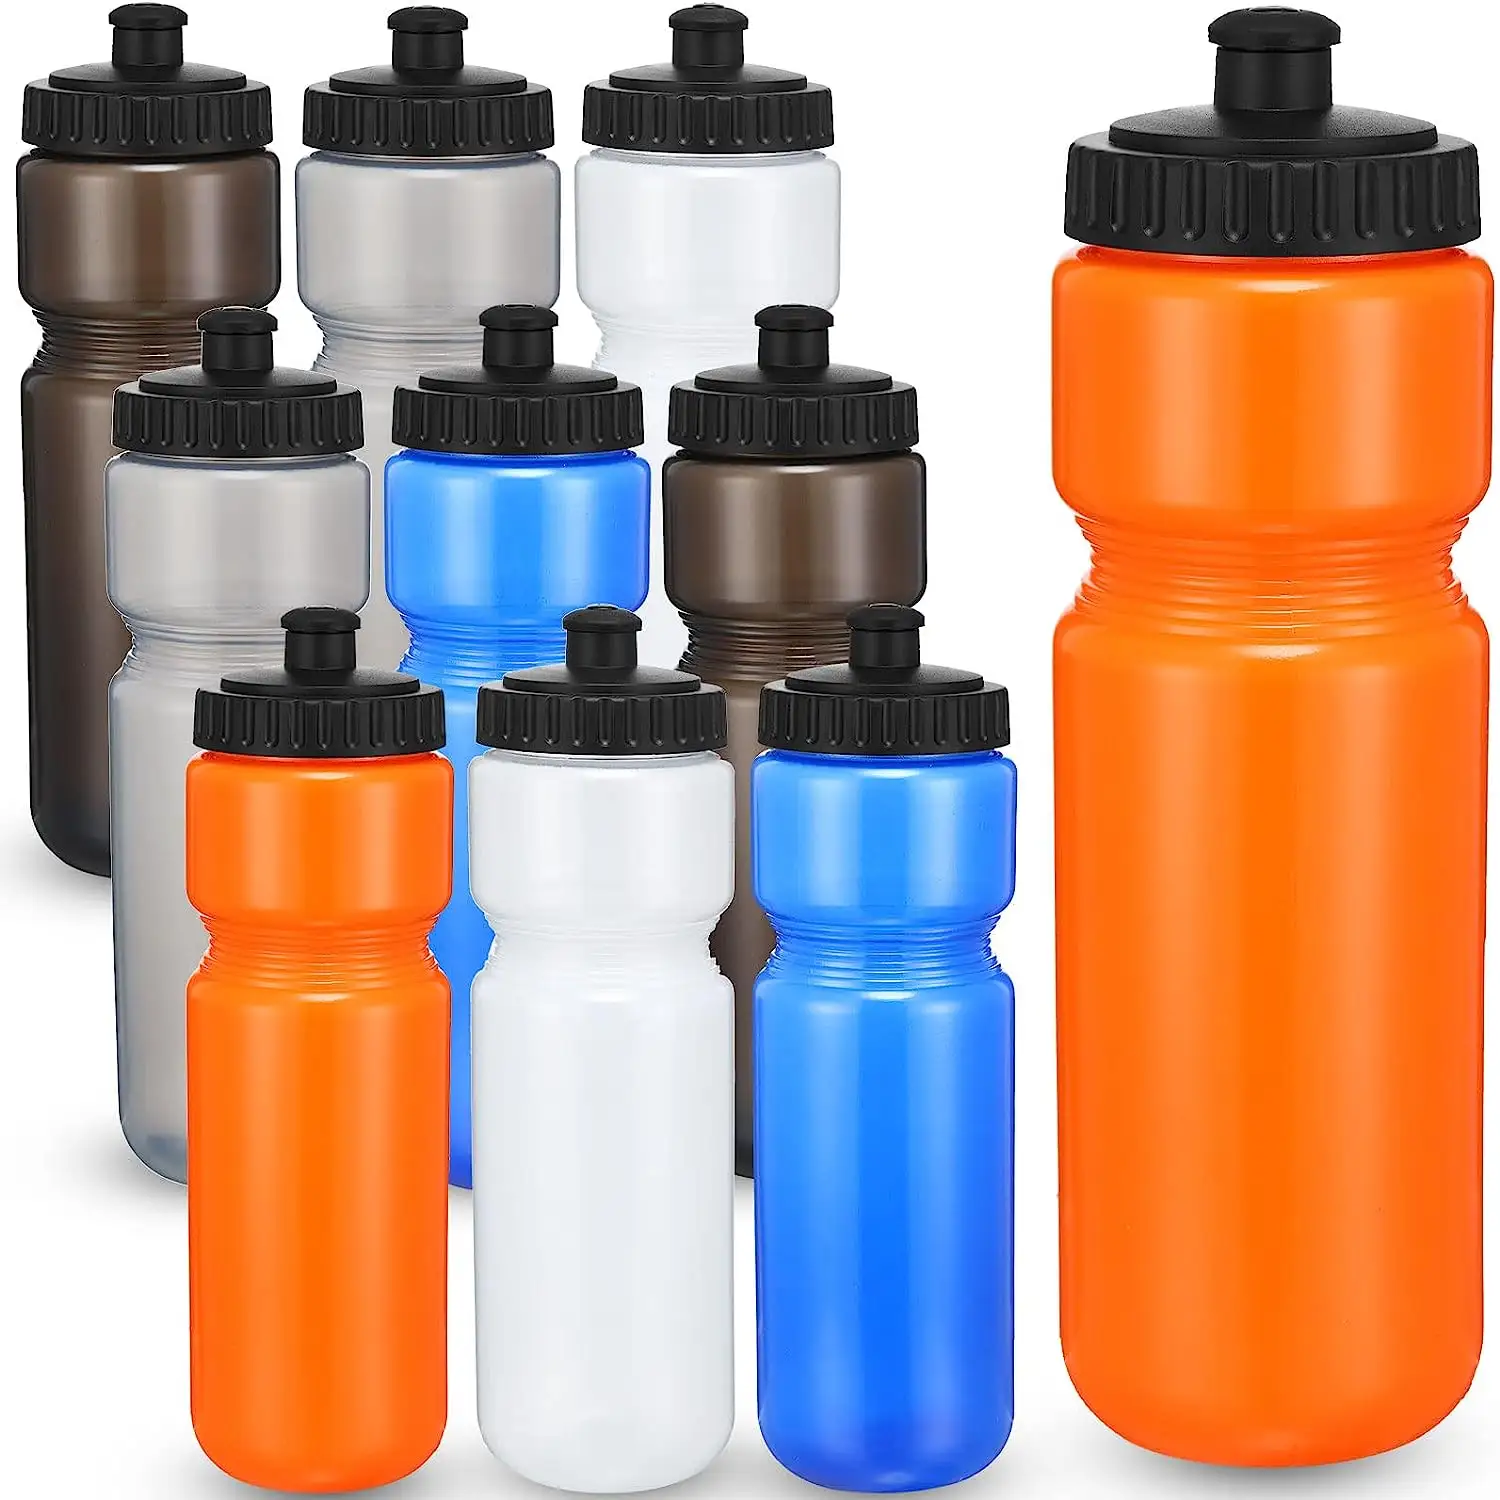 Pabrik panas harga grosir disesuaikan kualitas tinggi olahraga Gym latihan bersepeda berlari promosi botol air plastik pengambil